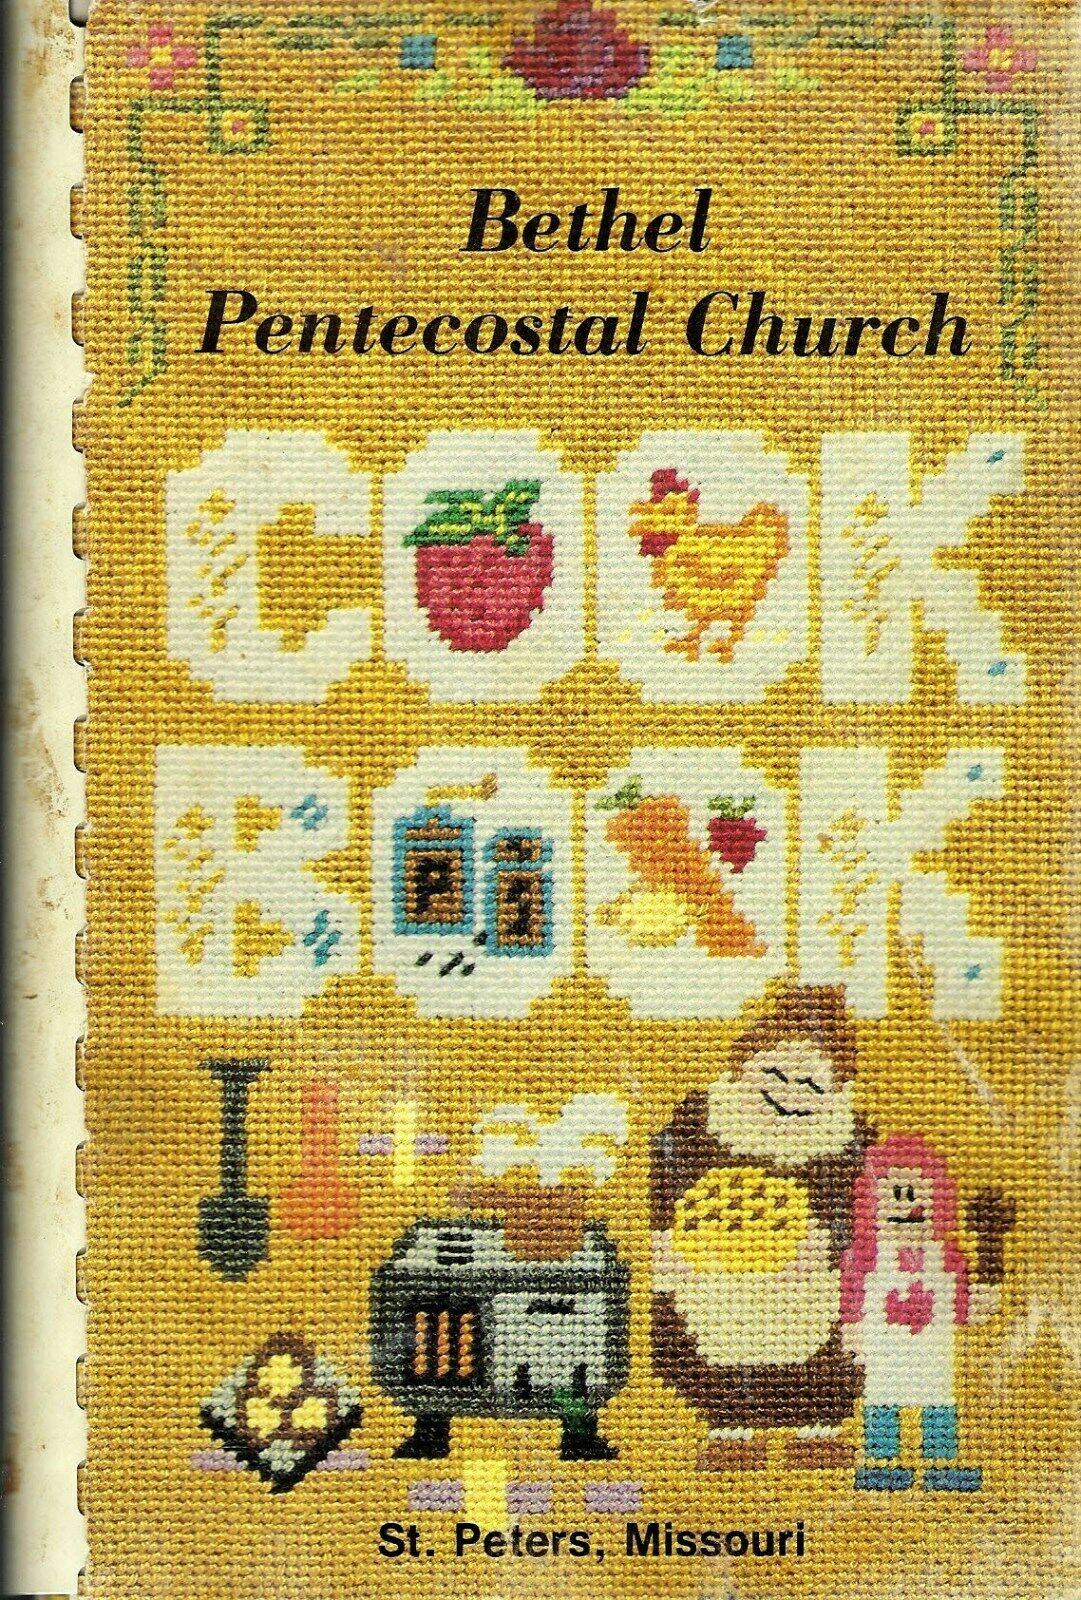 ST PETERS MO 1988 BETHEL PENTECOSTAL CHURCH COOK BOOK MISSOURI COMMUNITY RECIPES